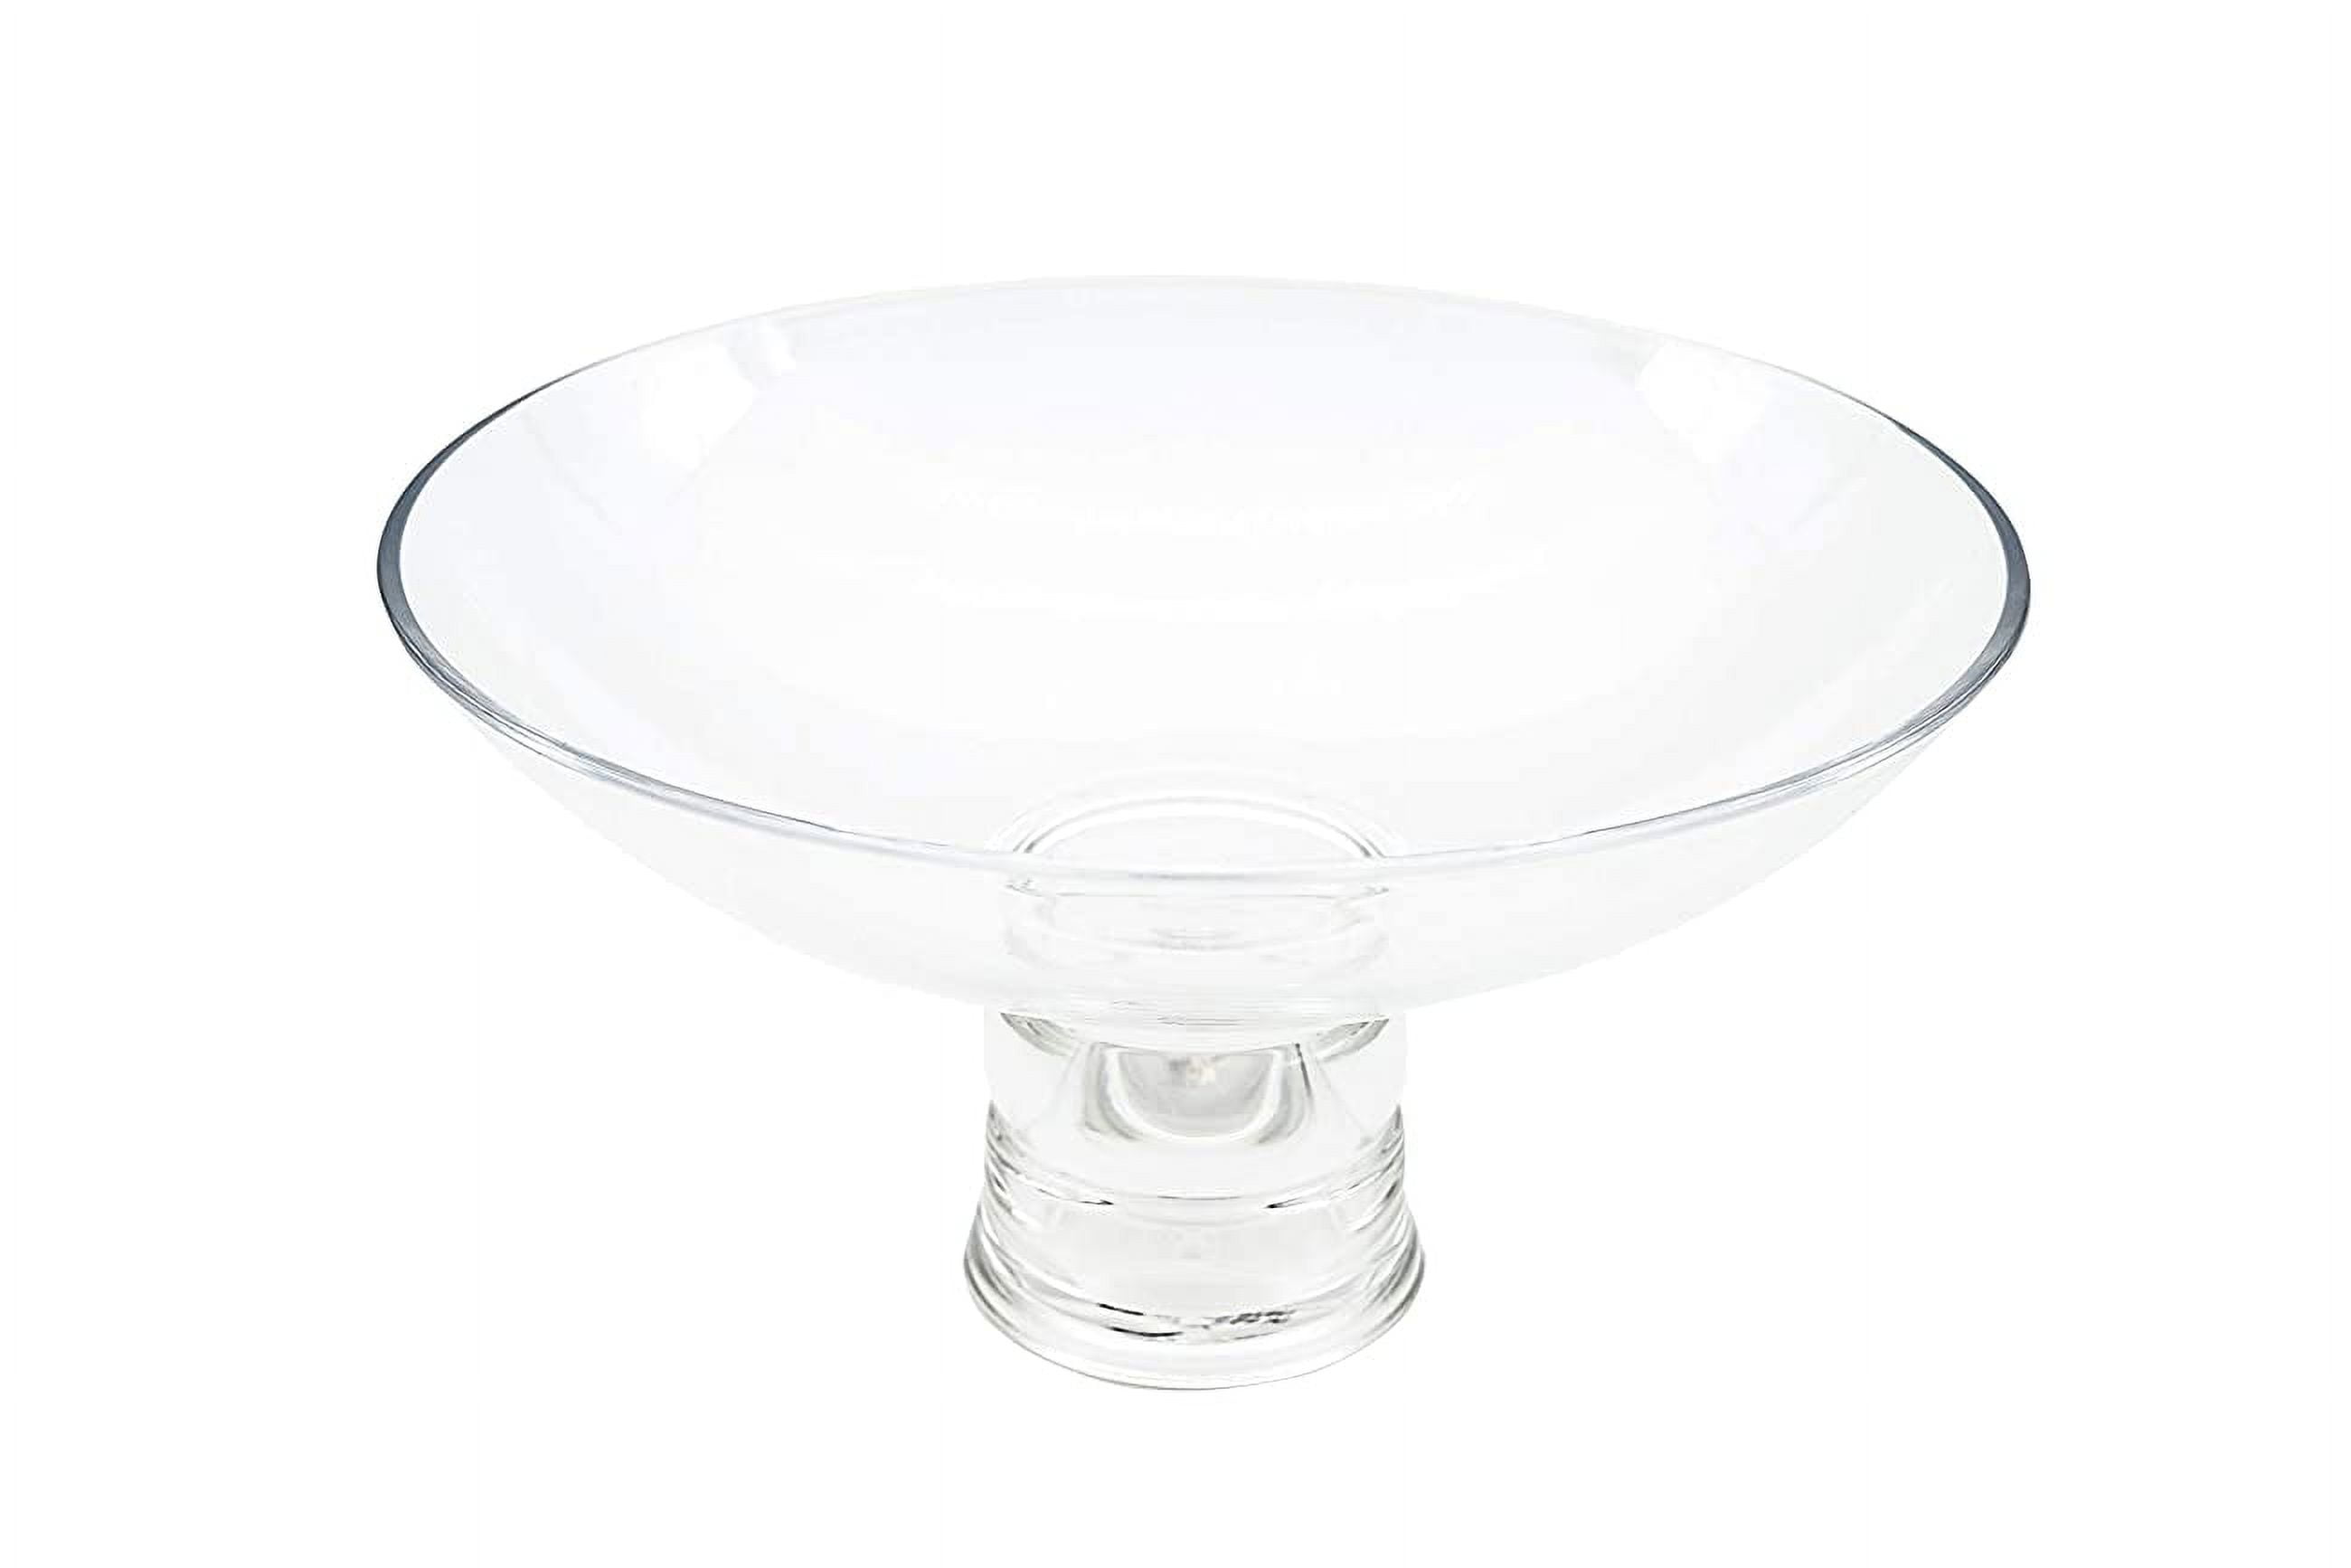 AllTopBargains 4pc Fruit Bowl Centerpiece Pedestal Crystal Clear Plastic Dessert Display Stand, Size: 9.8